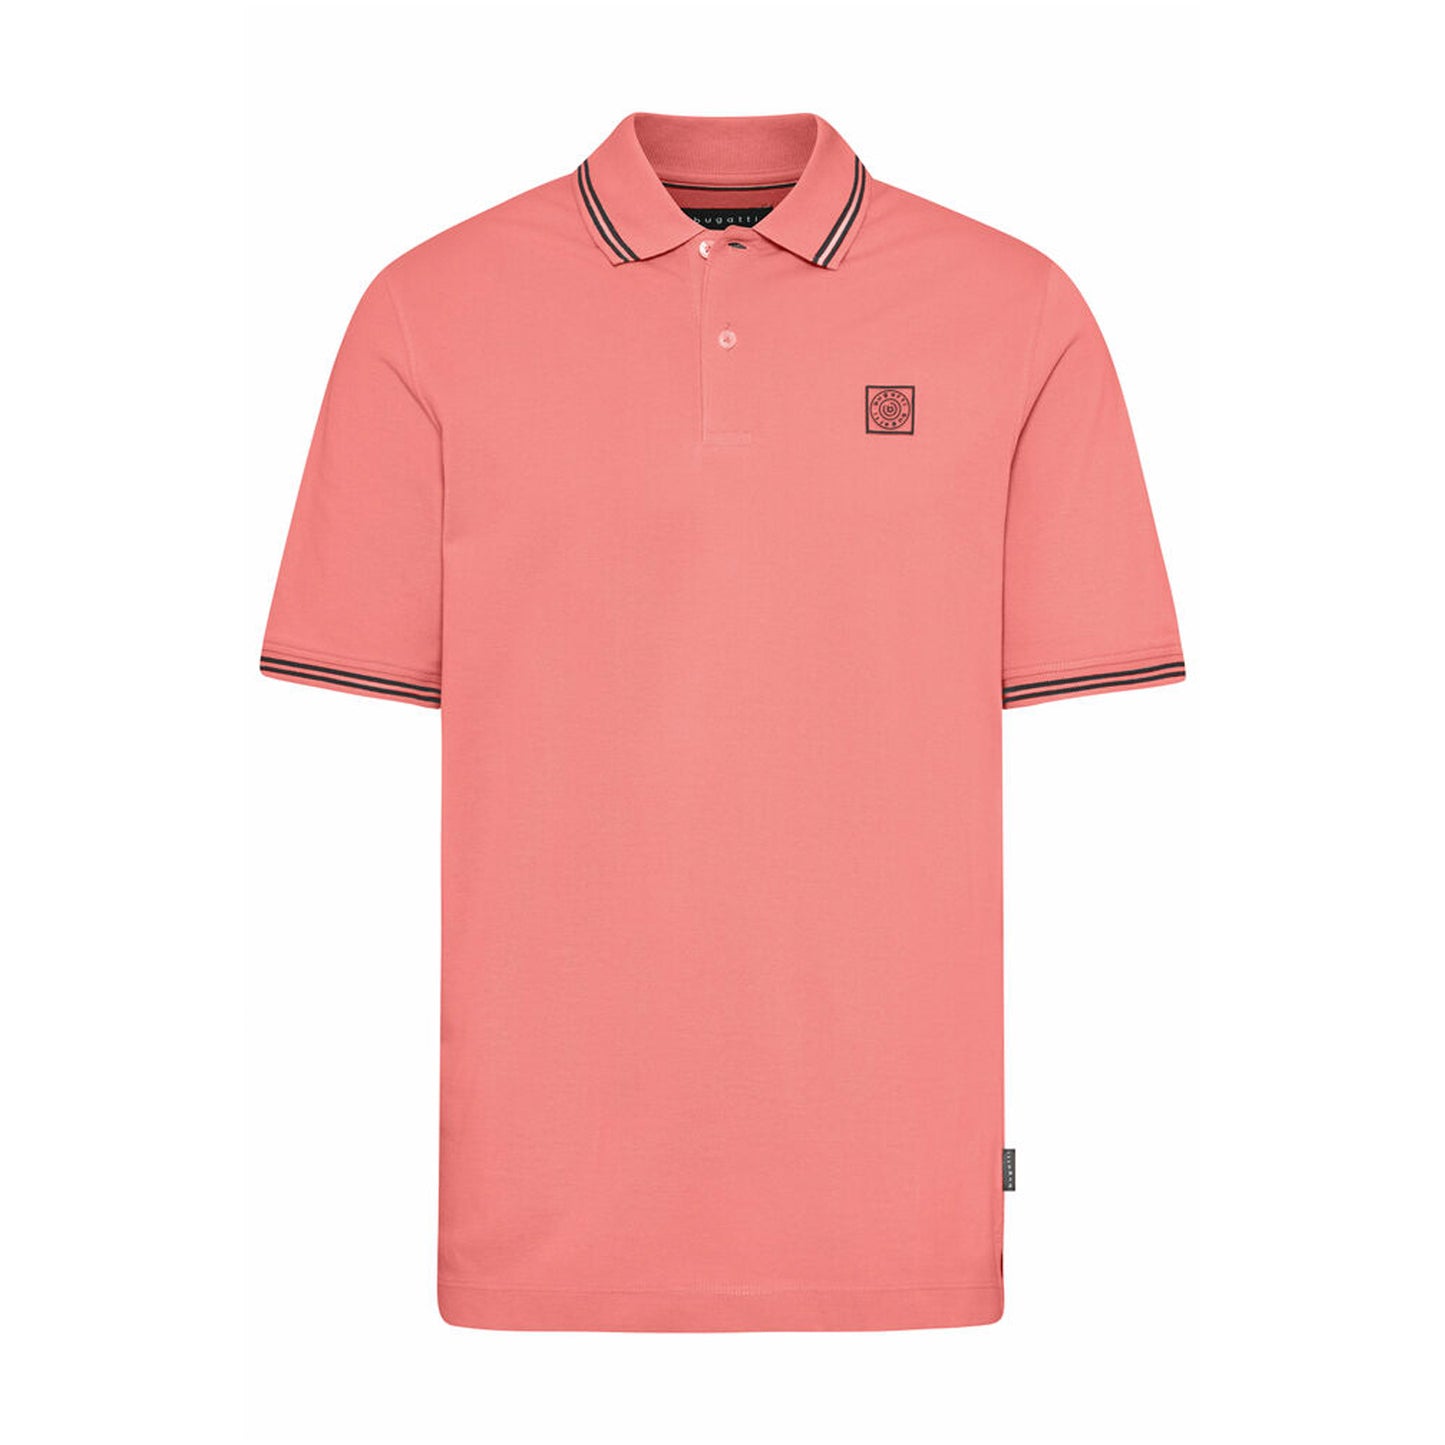 Bugatti Men's Pink Polo Premium Cotton Polo Shirt